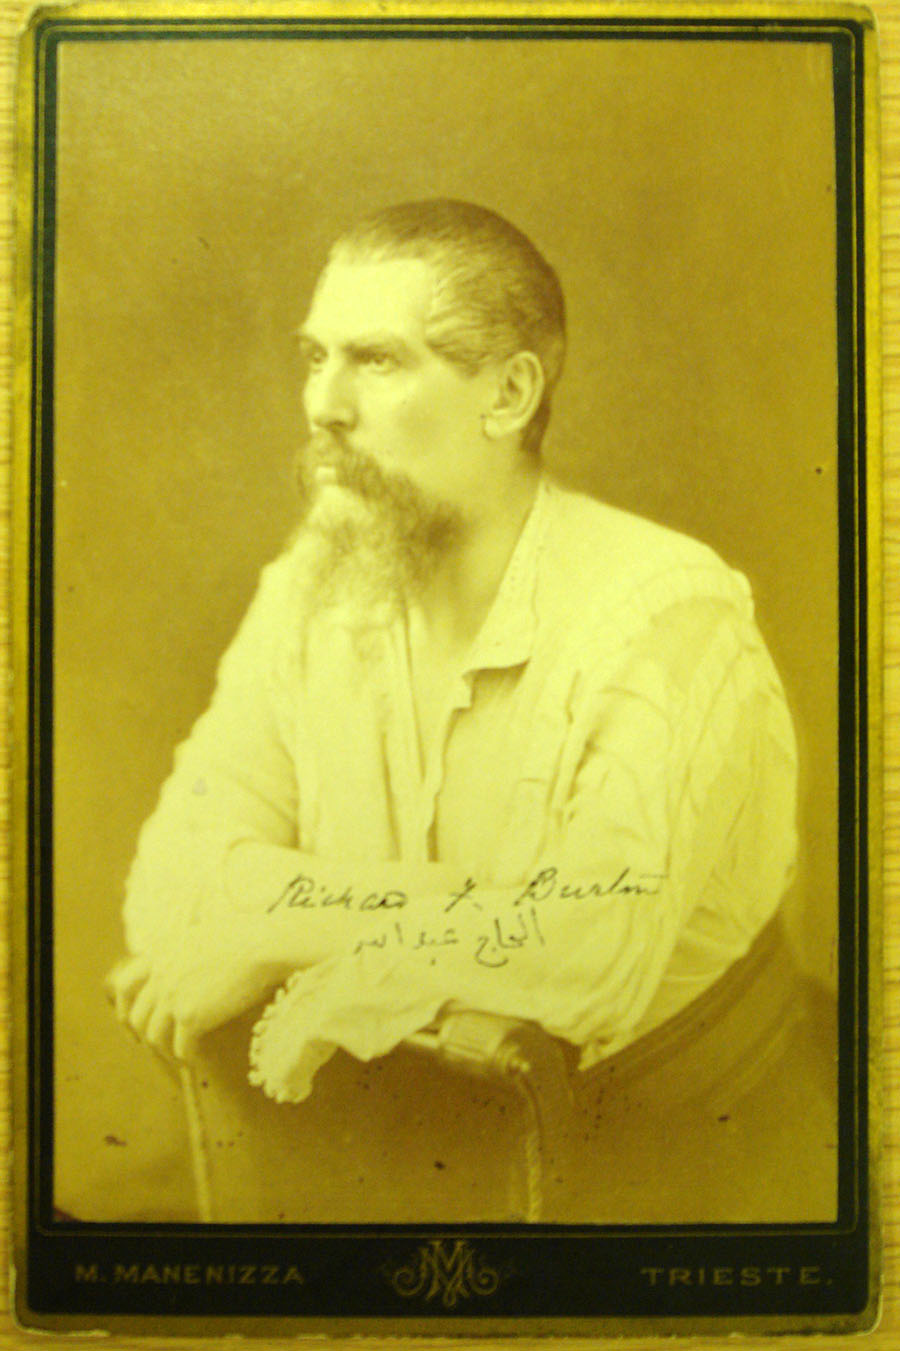 Photograph of Richard Burton in “Spanish shirt” at Trieste, c.1874